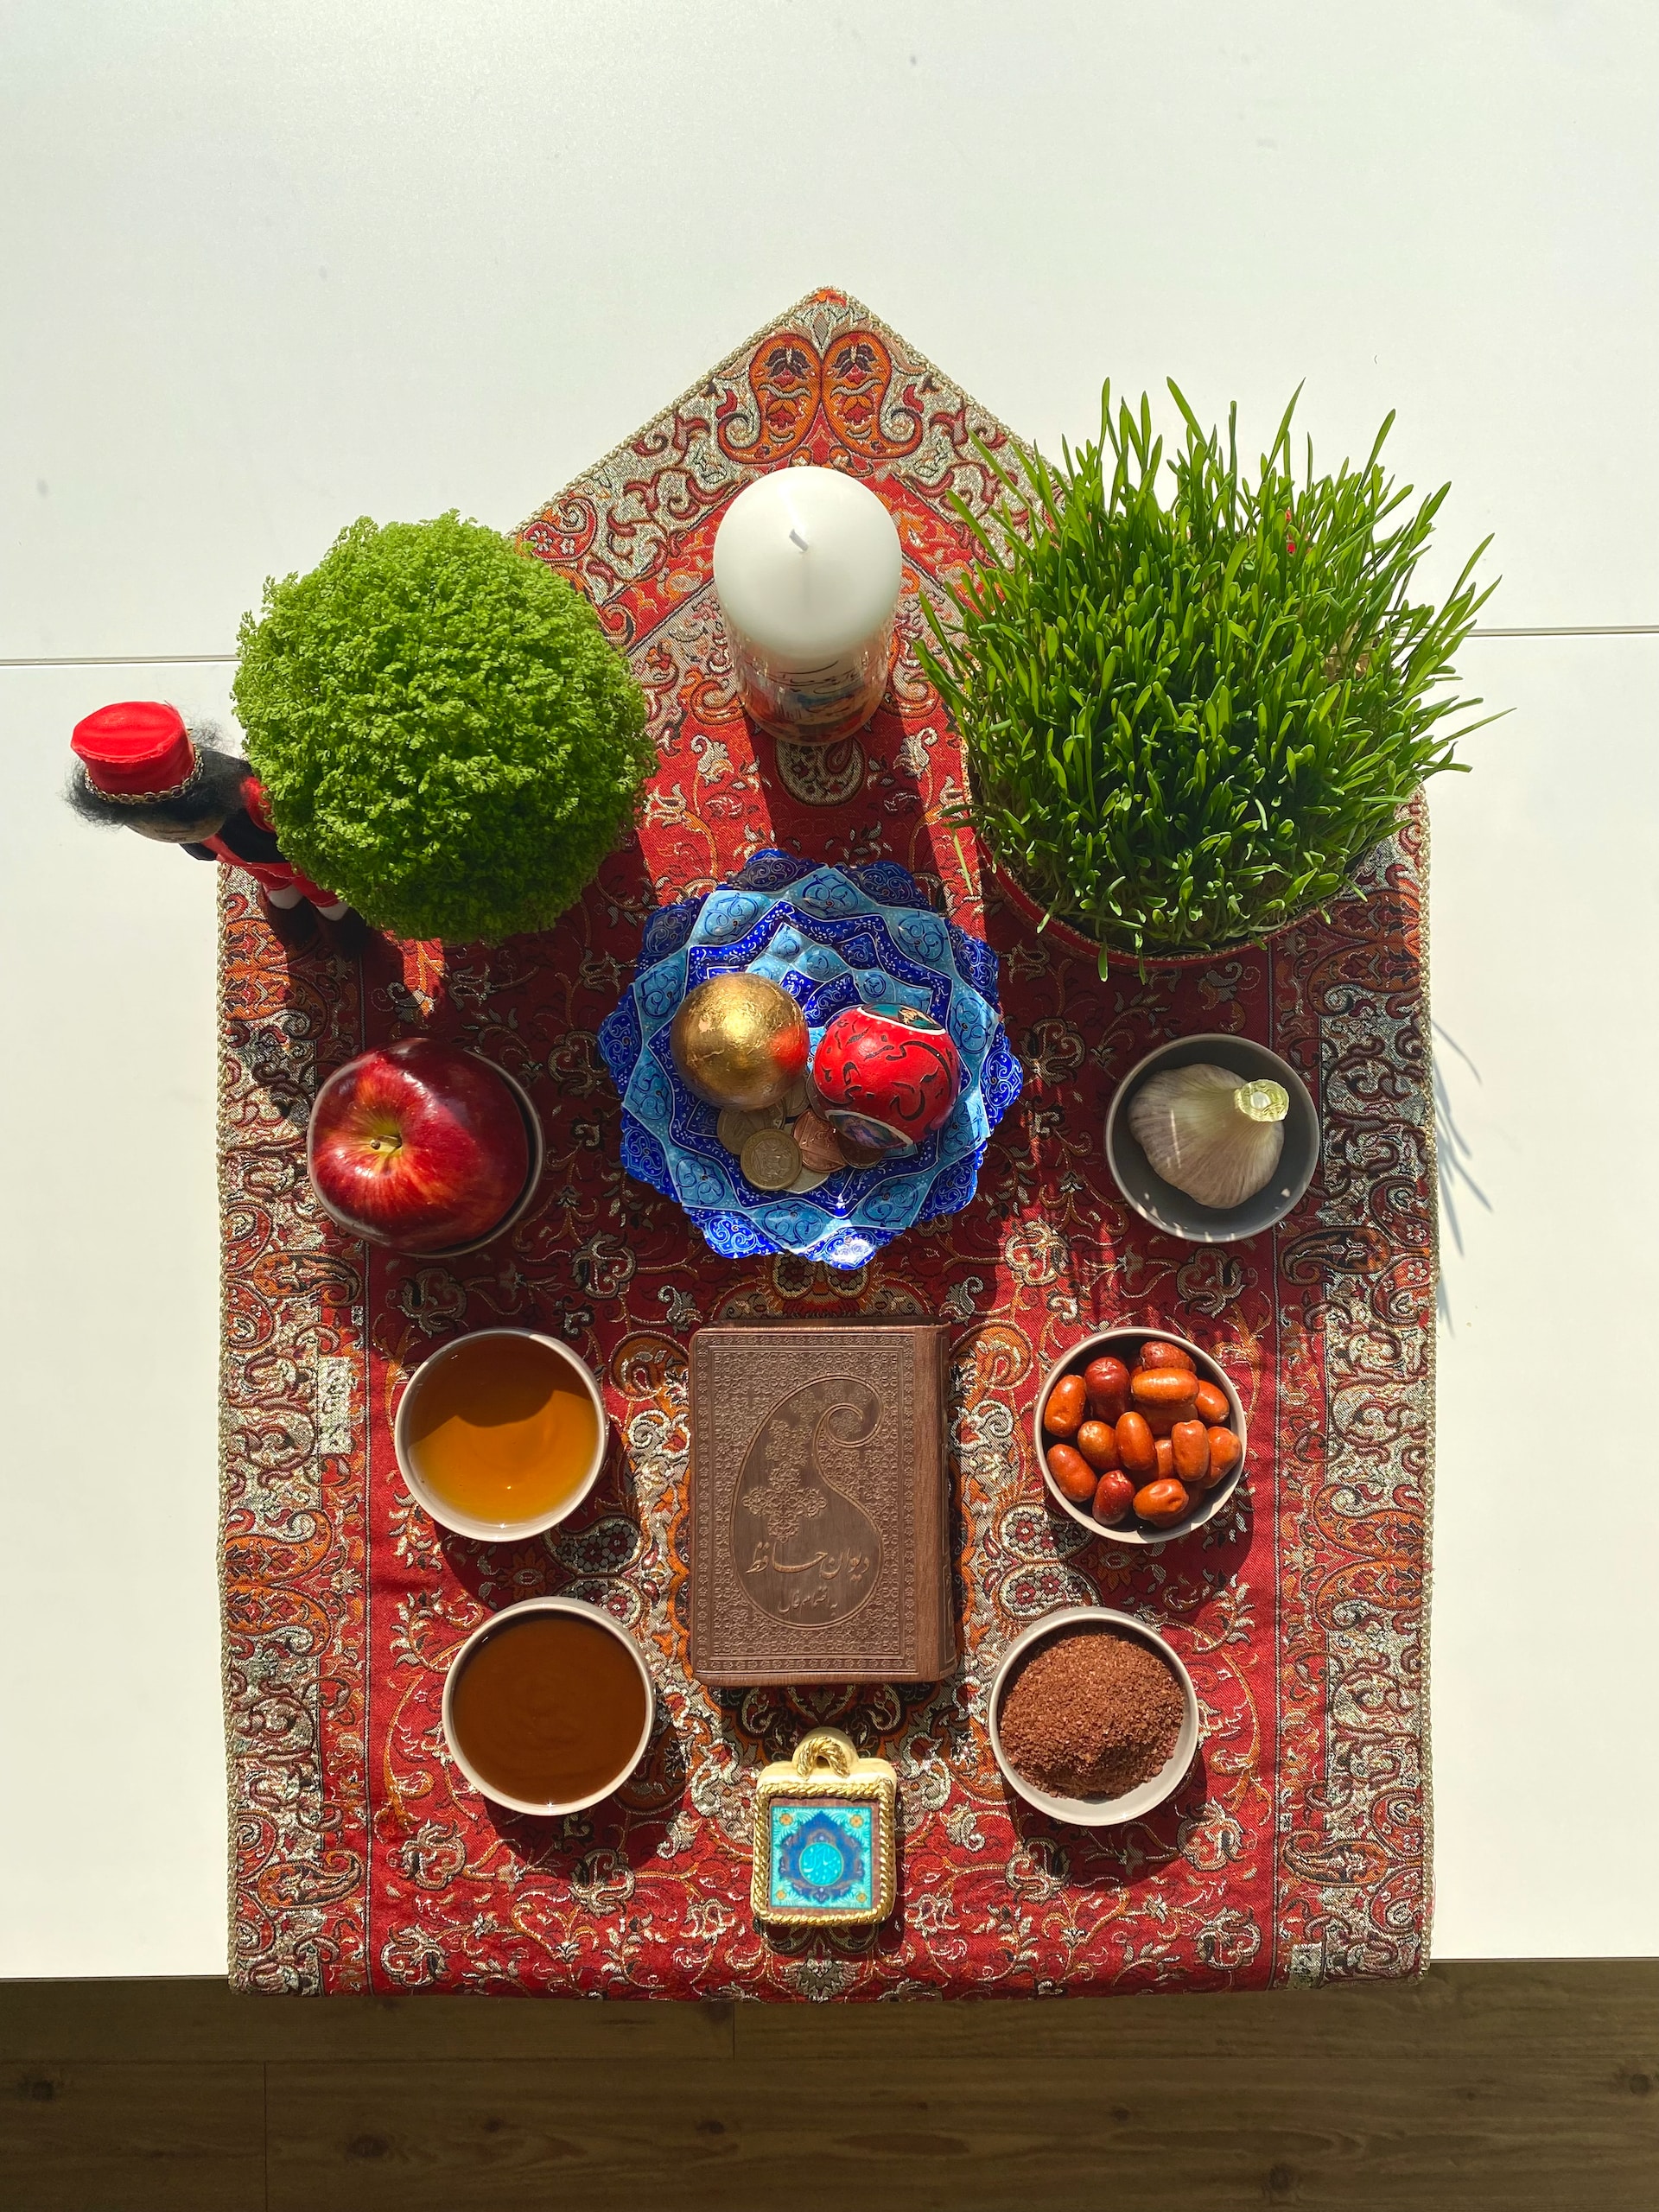 Image of a traditional Haft Seen display by Pouya Jabbarisani on Unsplash.